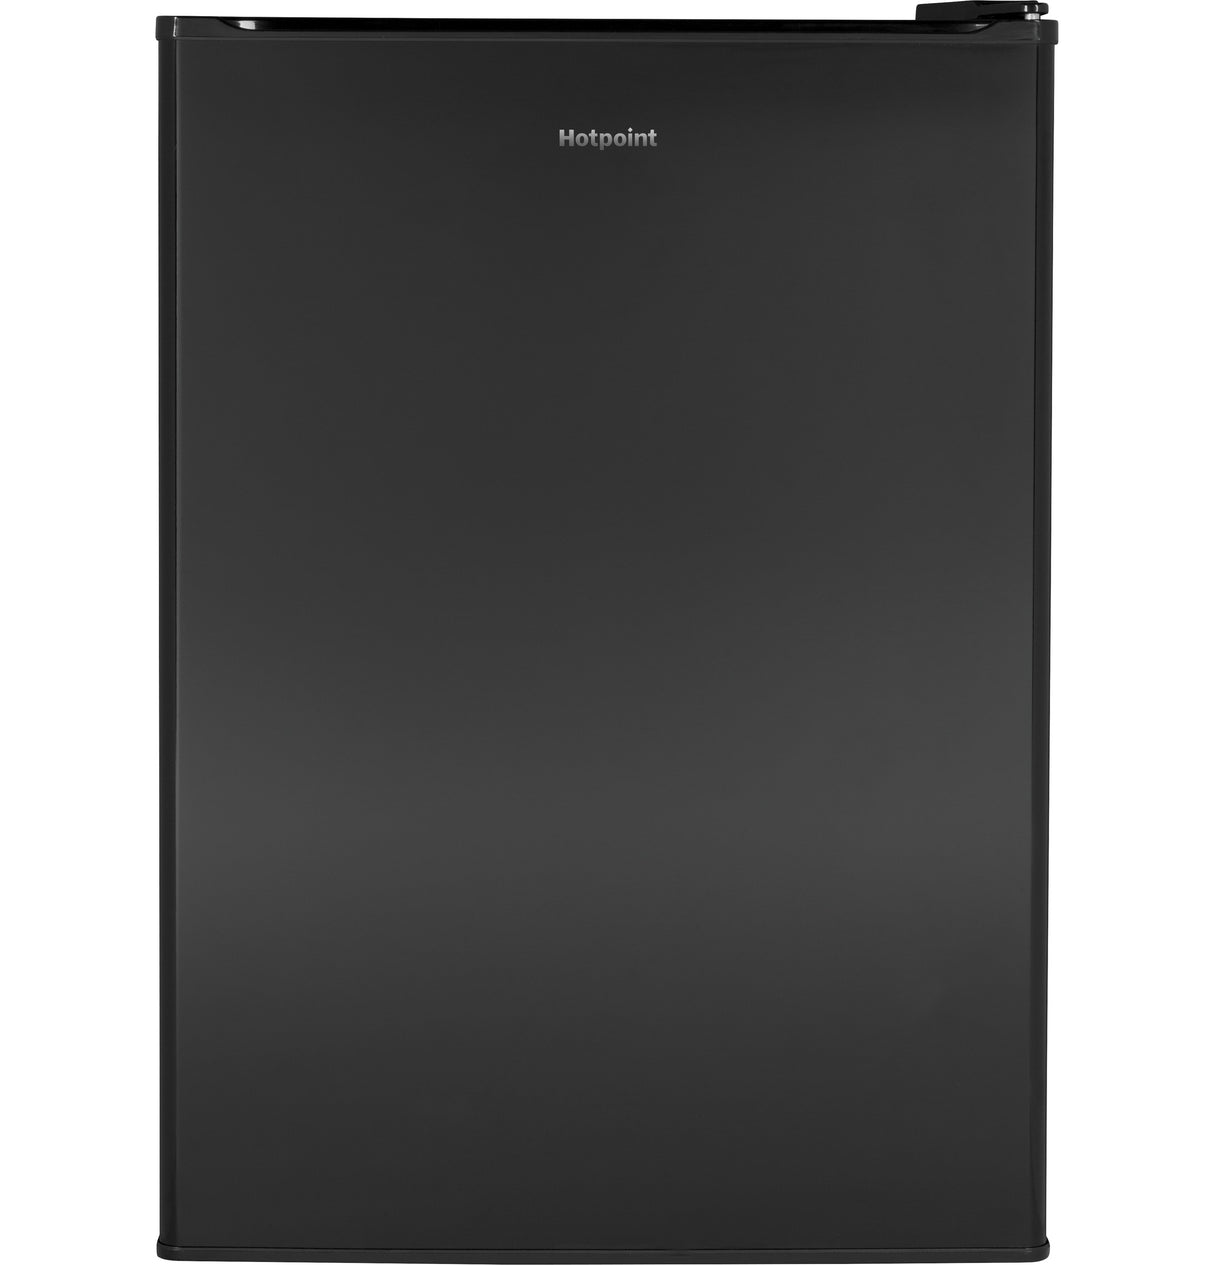 Hotpoint(R) 2.7 cu. ft. ENERGY STAR(R) Qualified Compact Refrigerator - (HME03GGMBB)